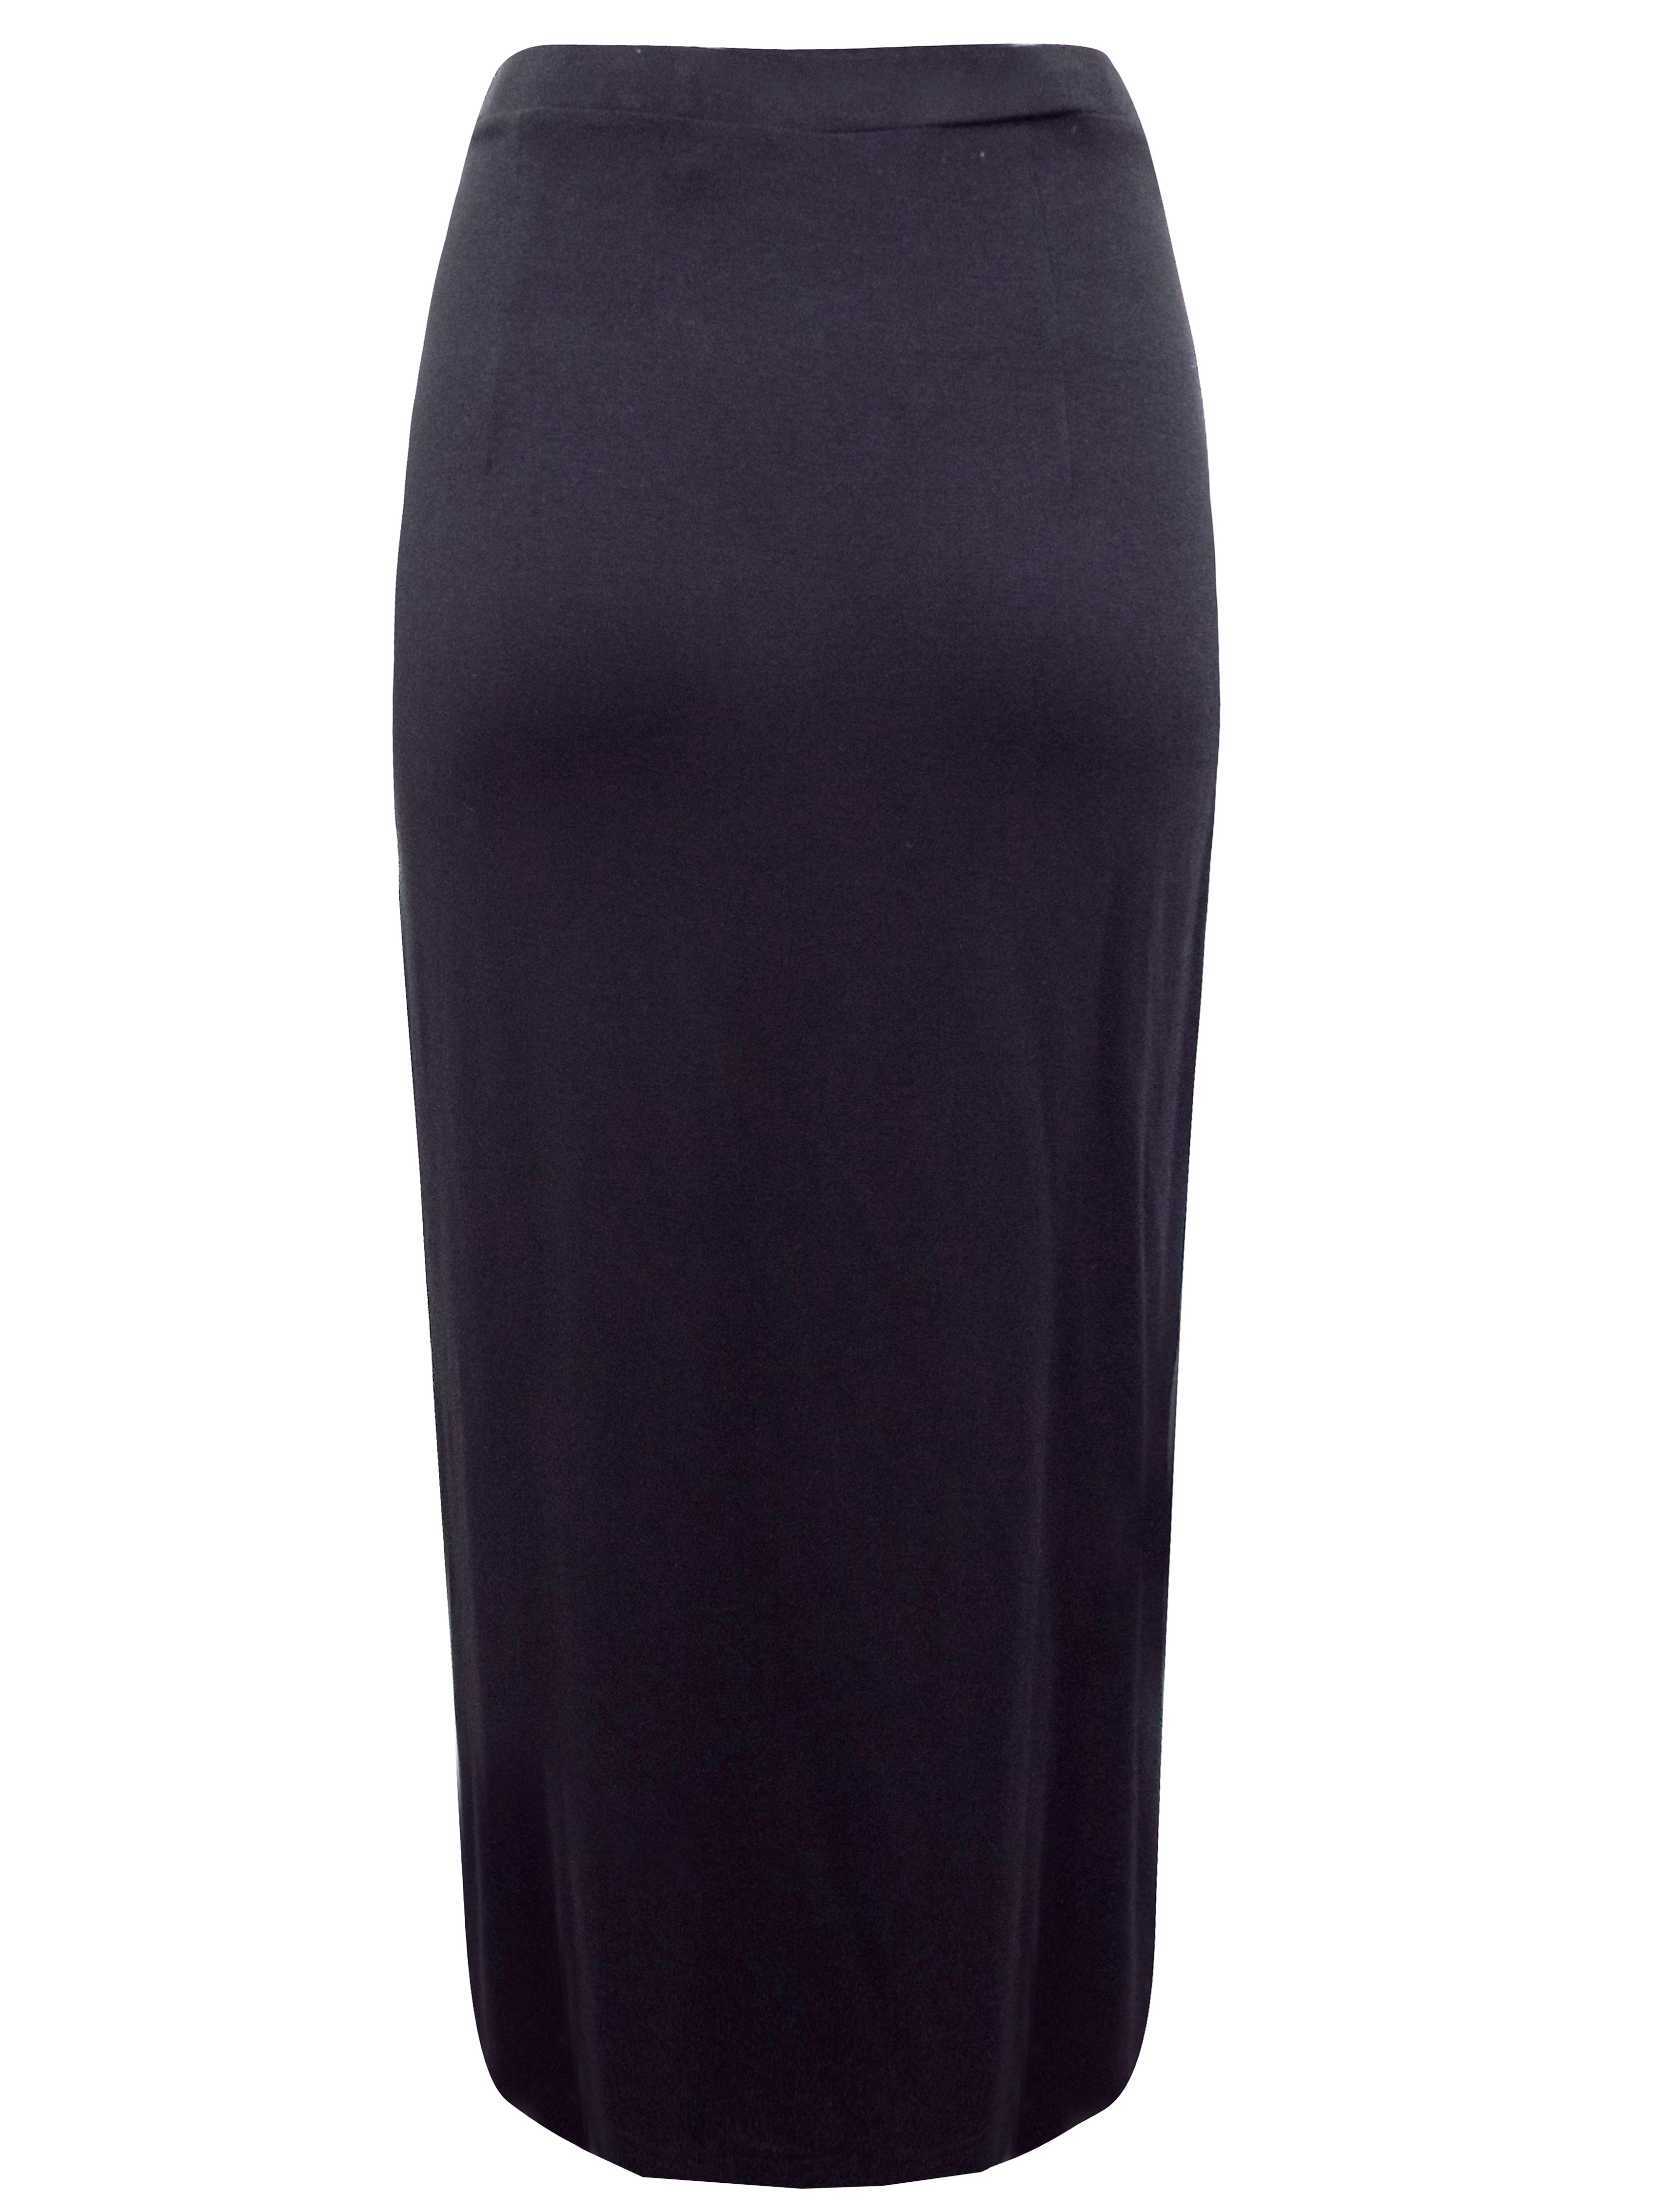 Capri - - Adini BLACK Pull On Jersey Pencil Skirt - Size 10 to 20